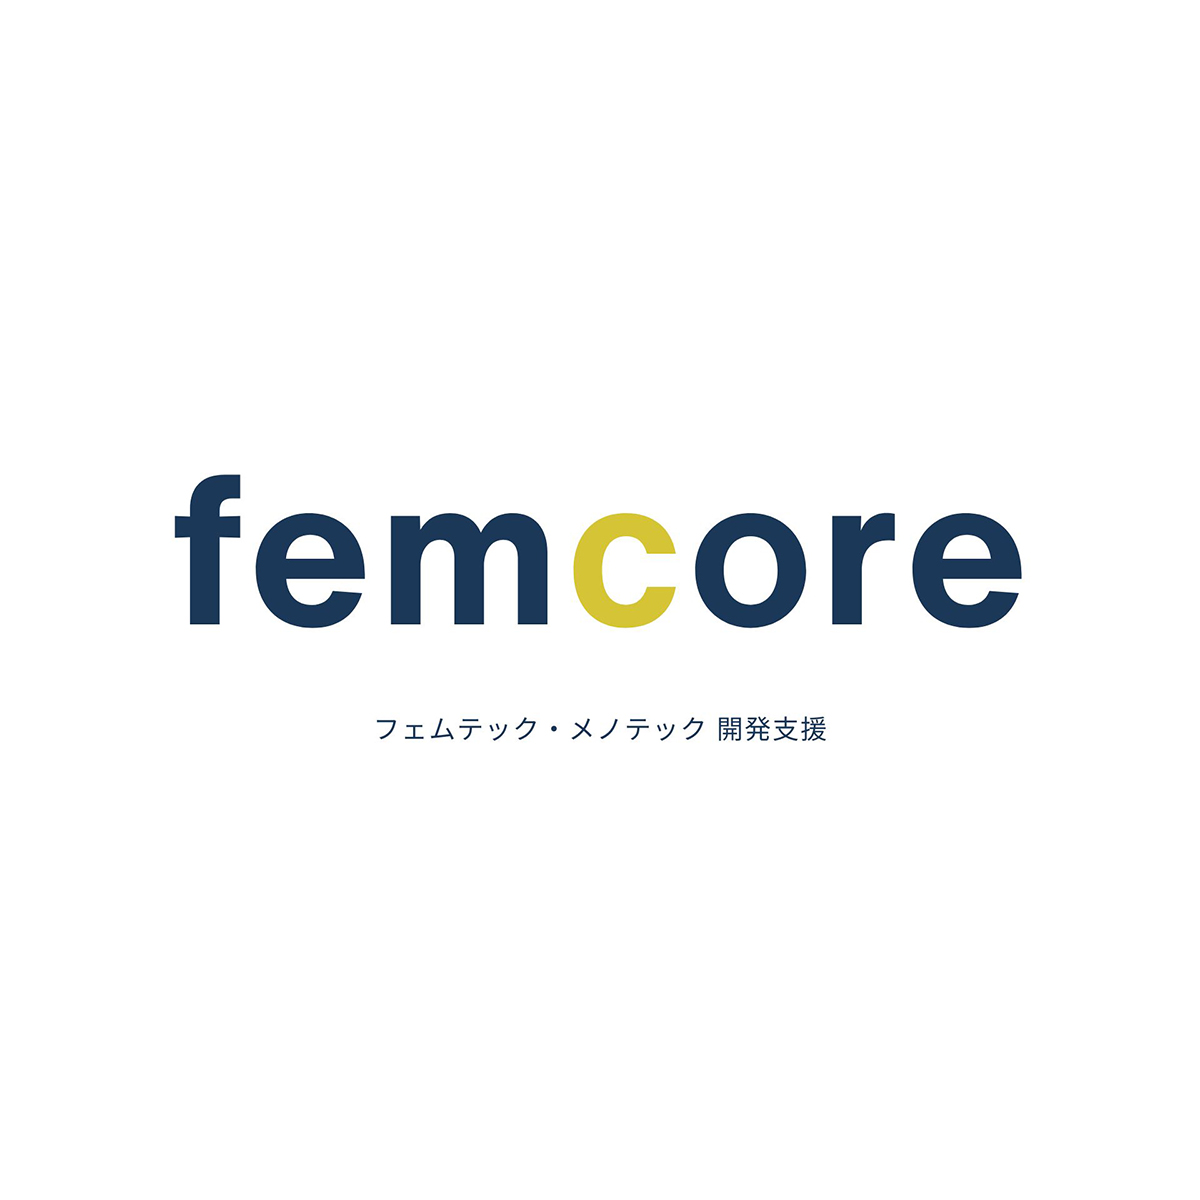 femcore | フェムテック開発支援